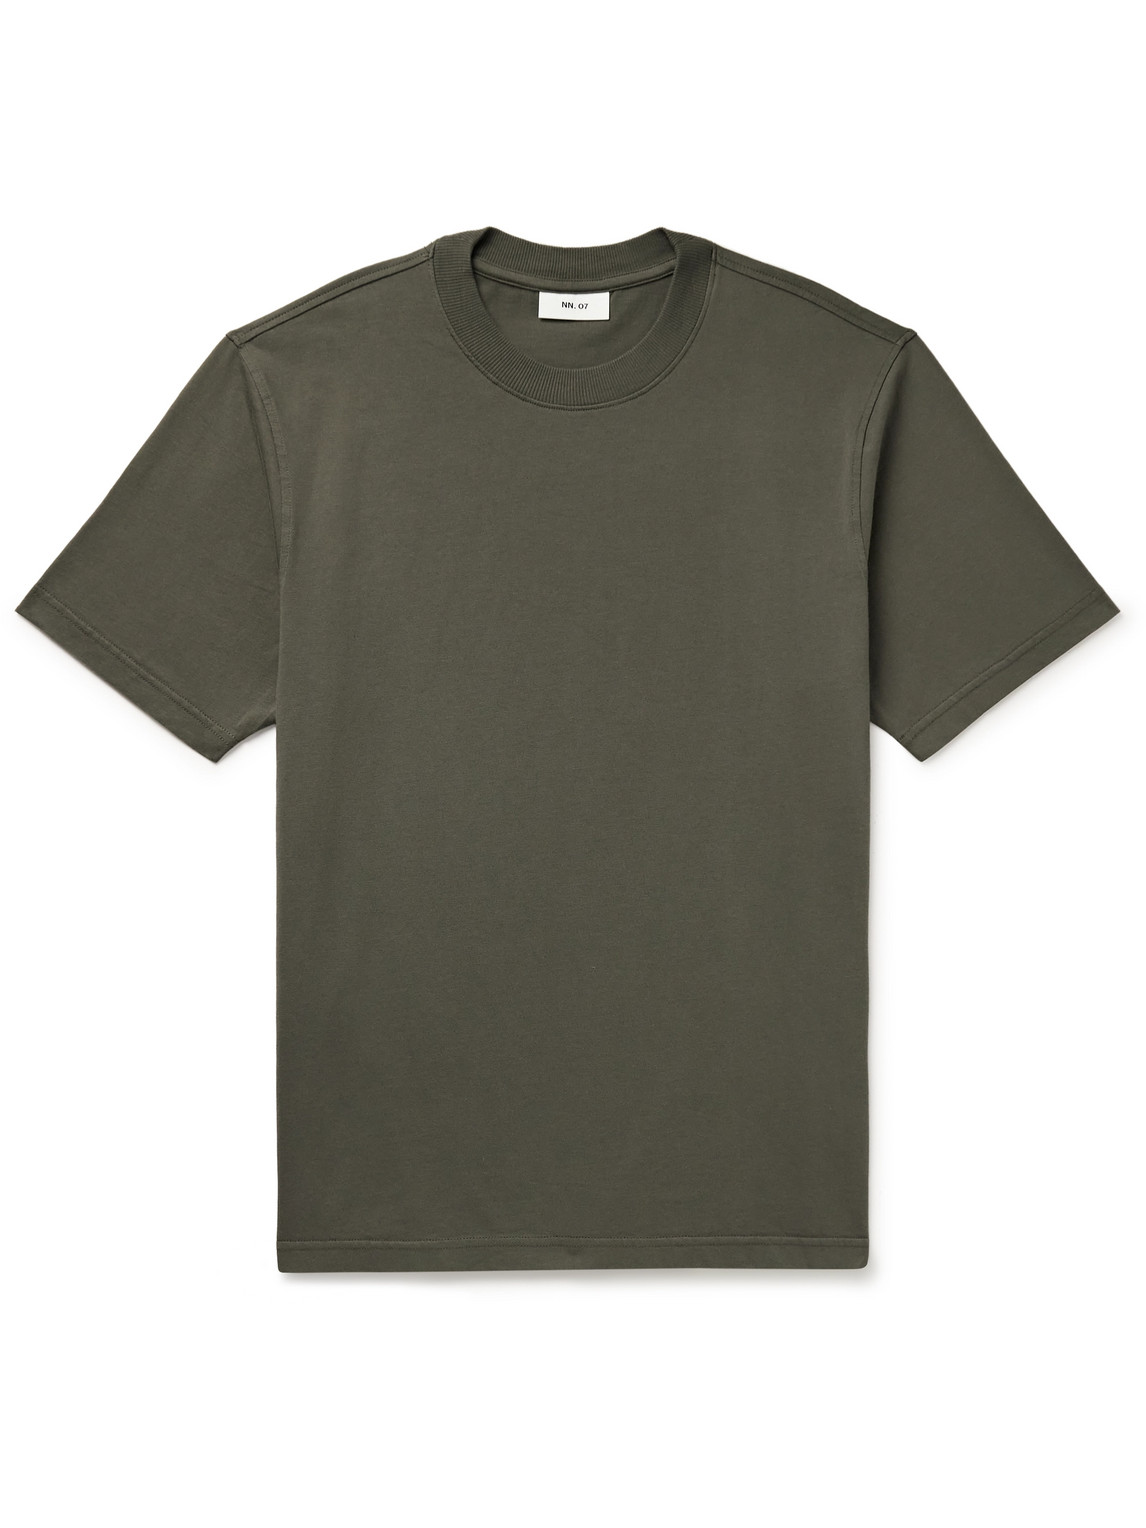 Adam 3209 Pima Cotton-Jersey T-Shirt